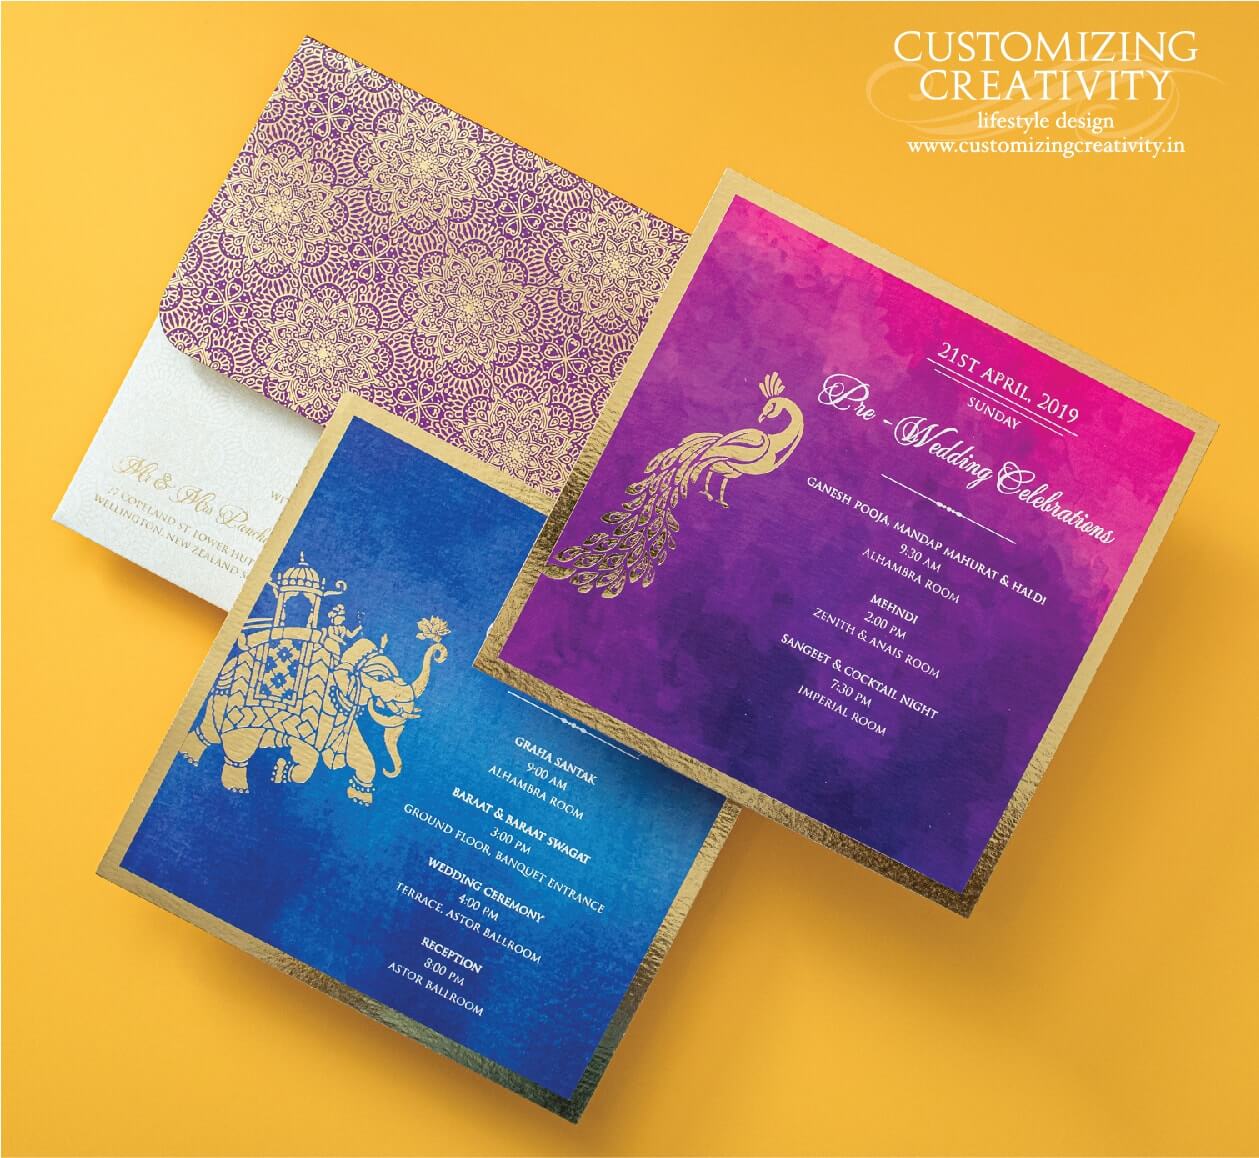 Customized Cards and Unique Wedding Invitations – Customizing Creativity